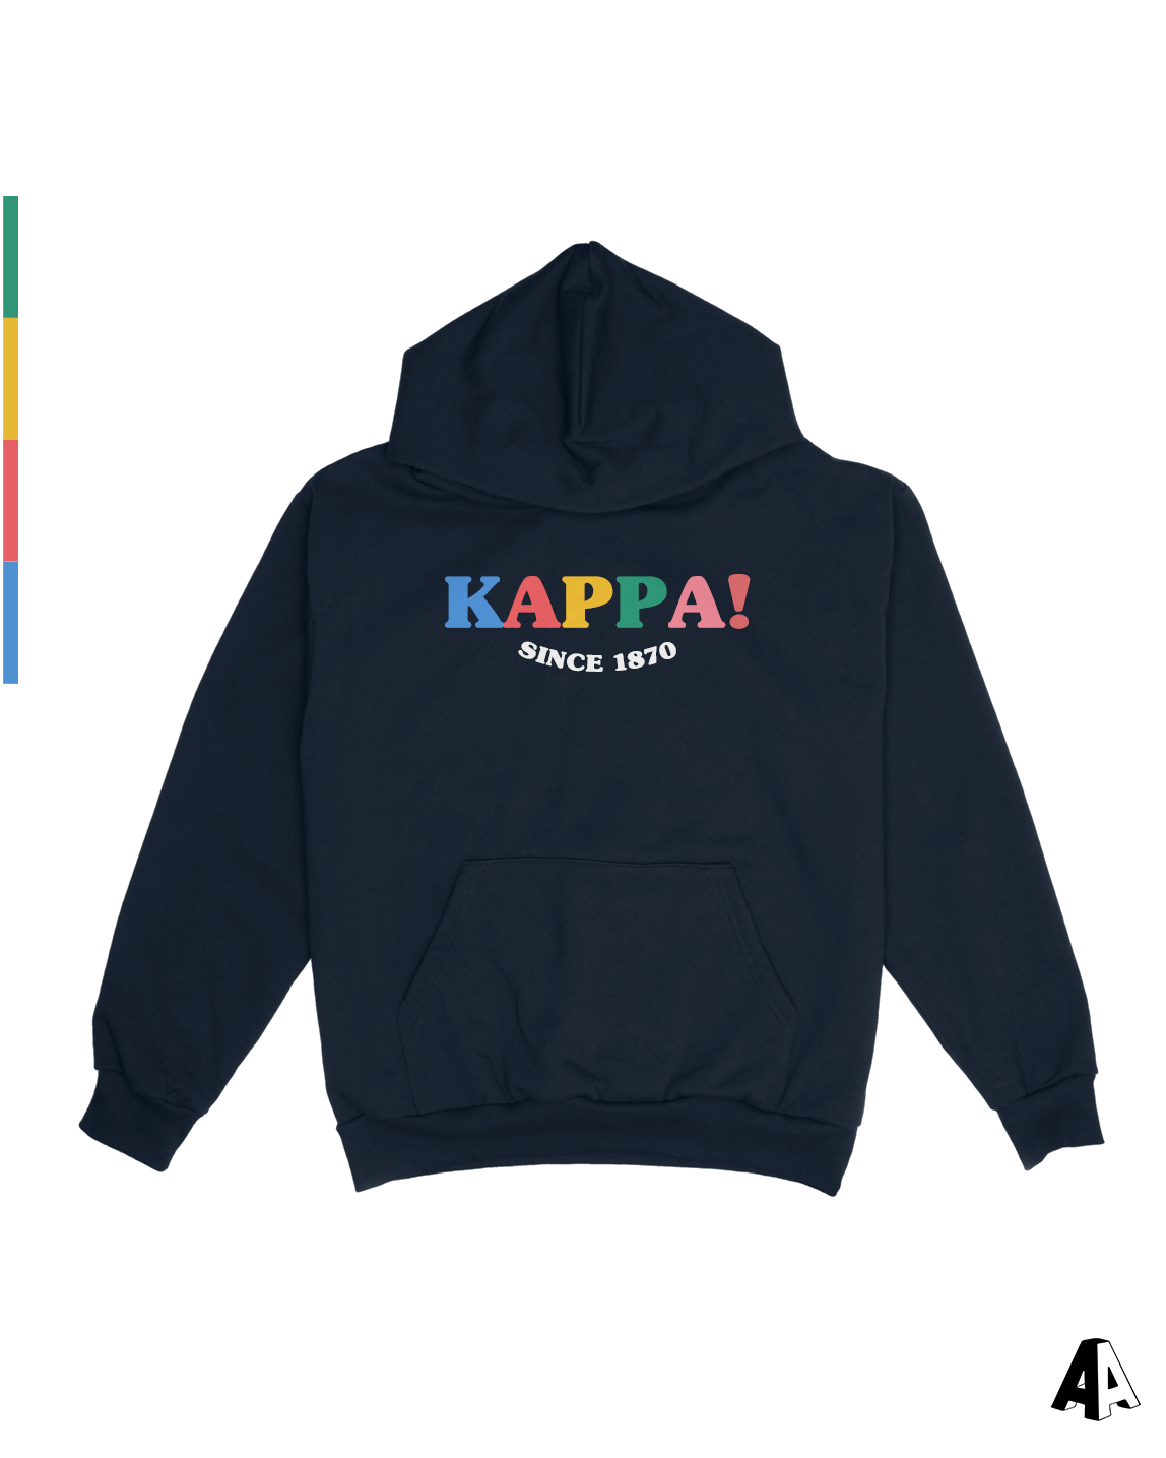 kappa kappa gamma merchandise sale